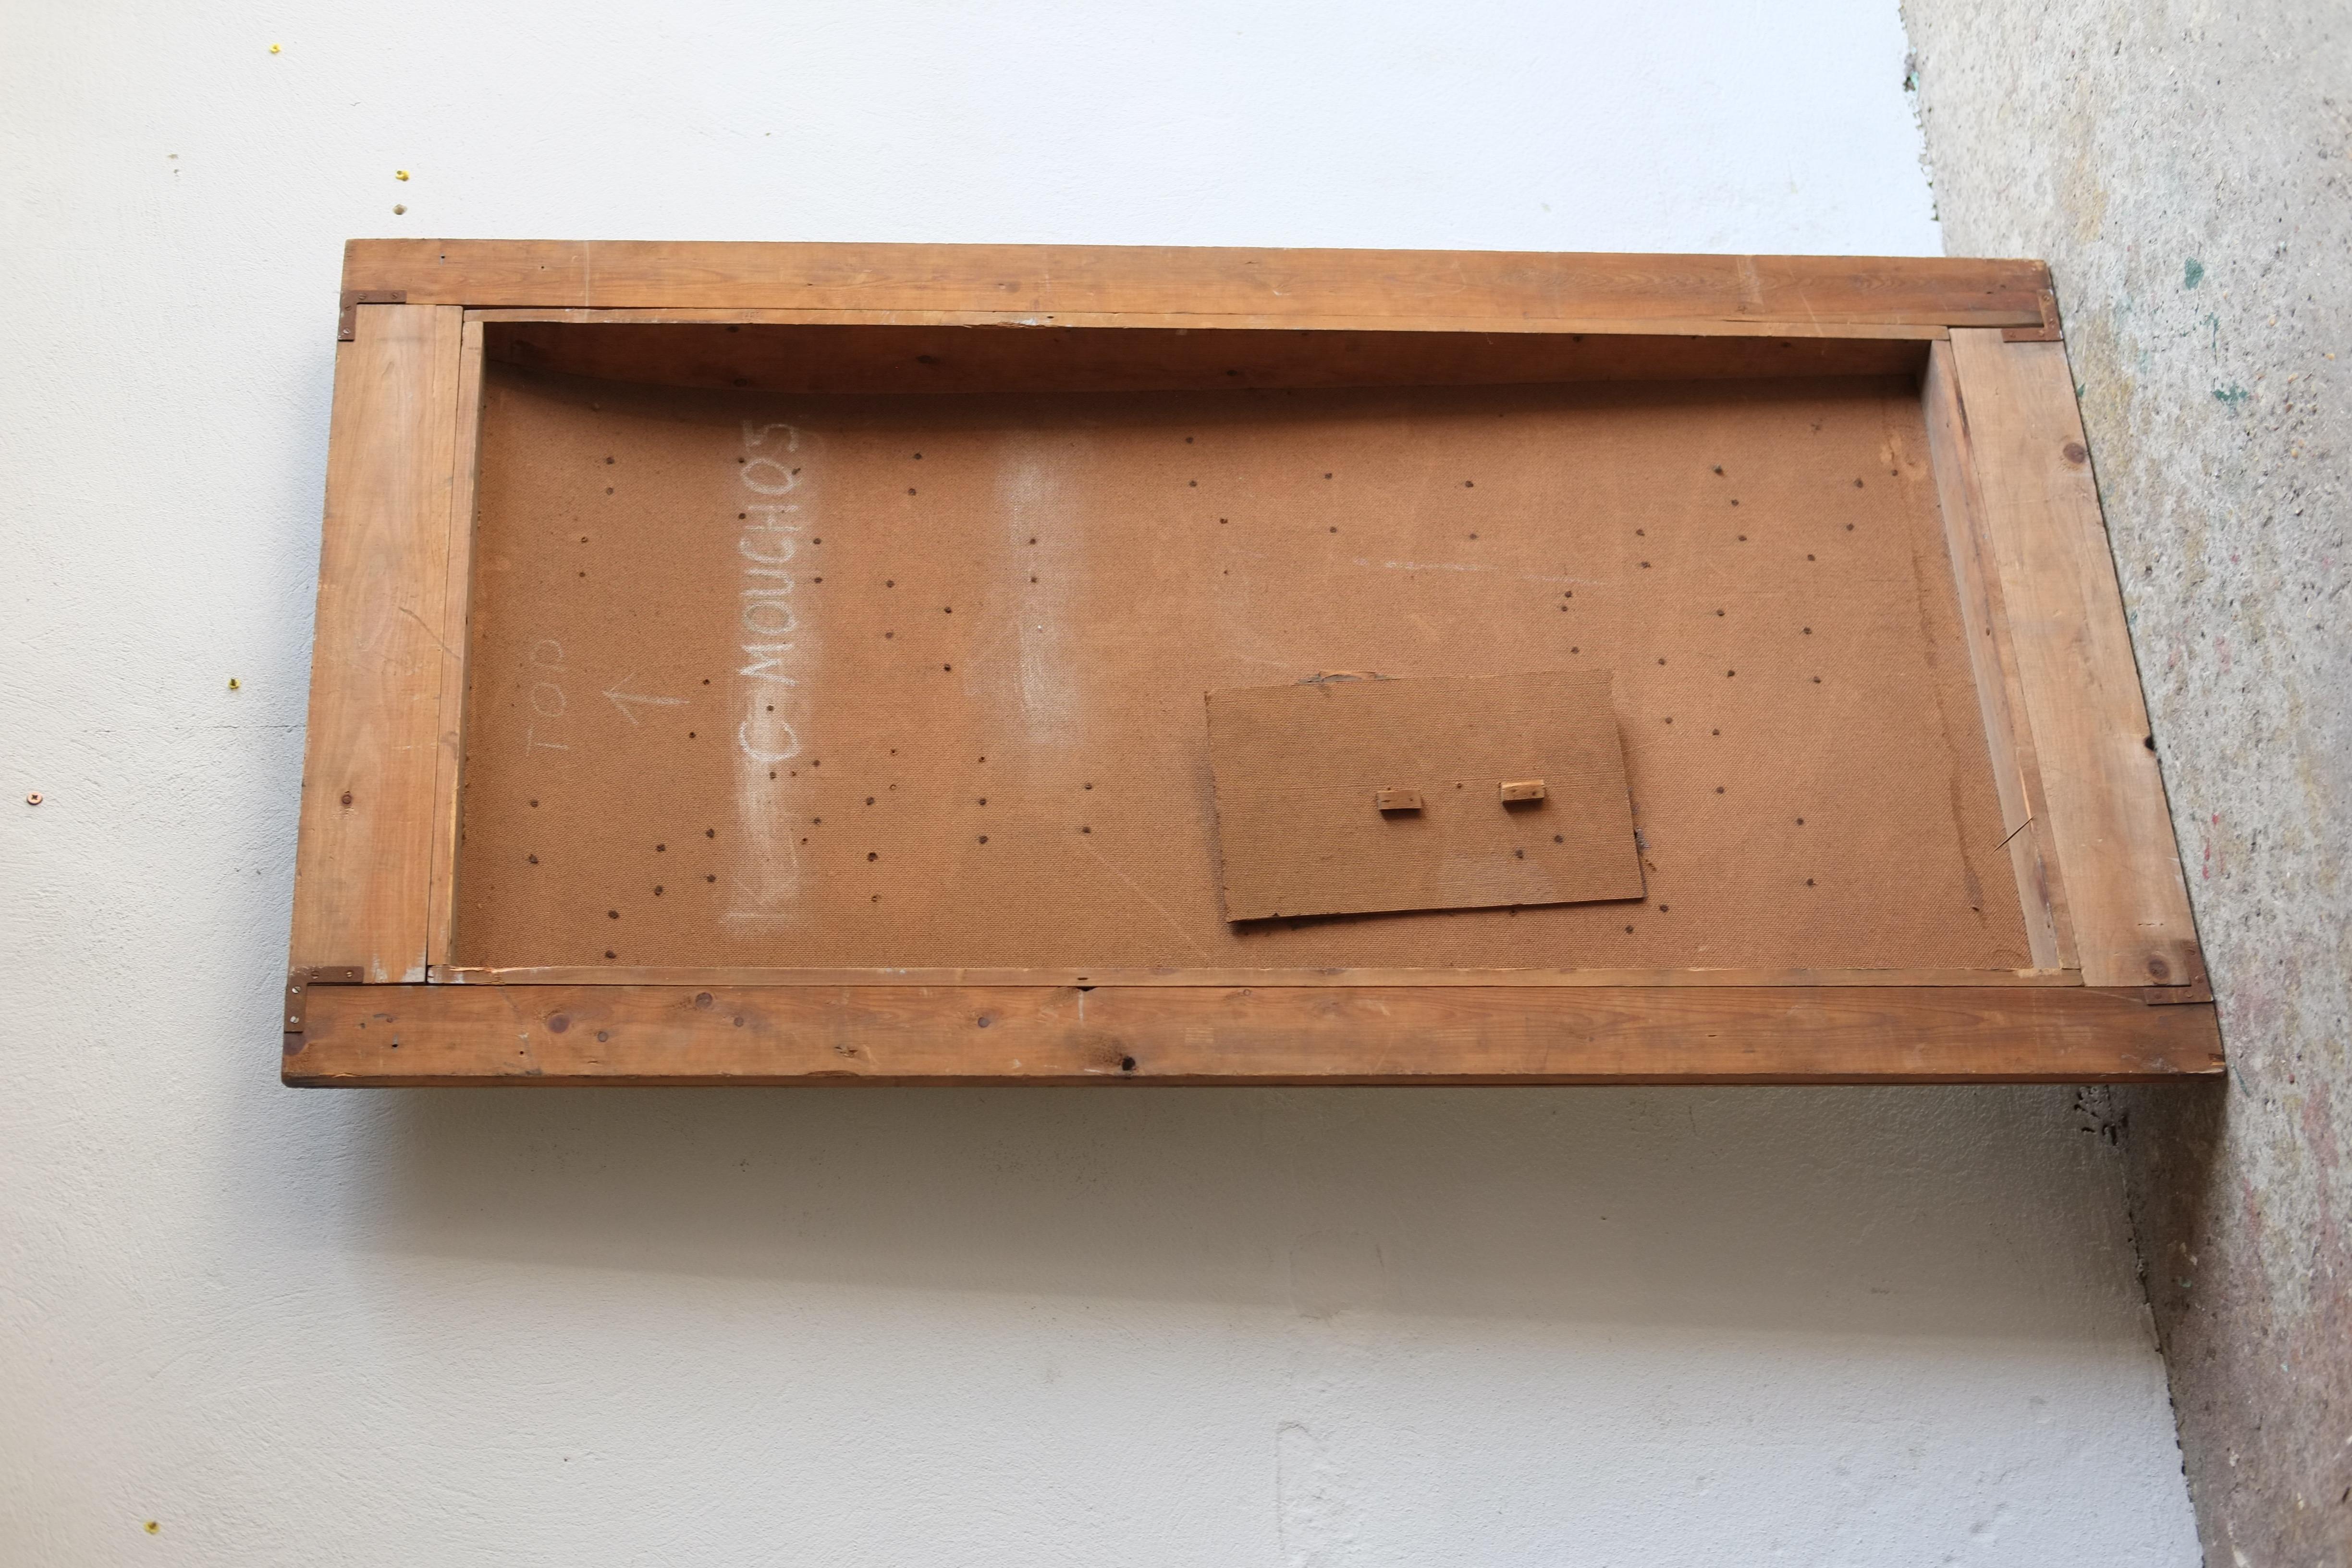 Constructivist Abstract Relief, C Mouchos, 1960's For Sale 5